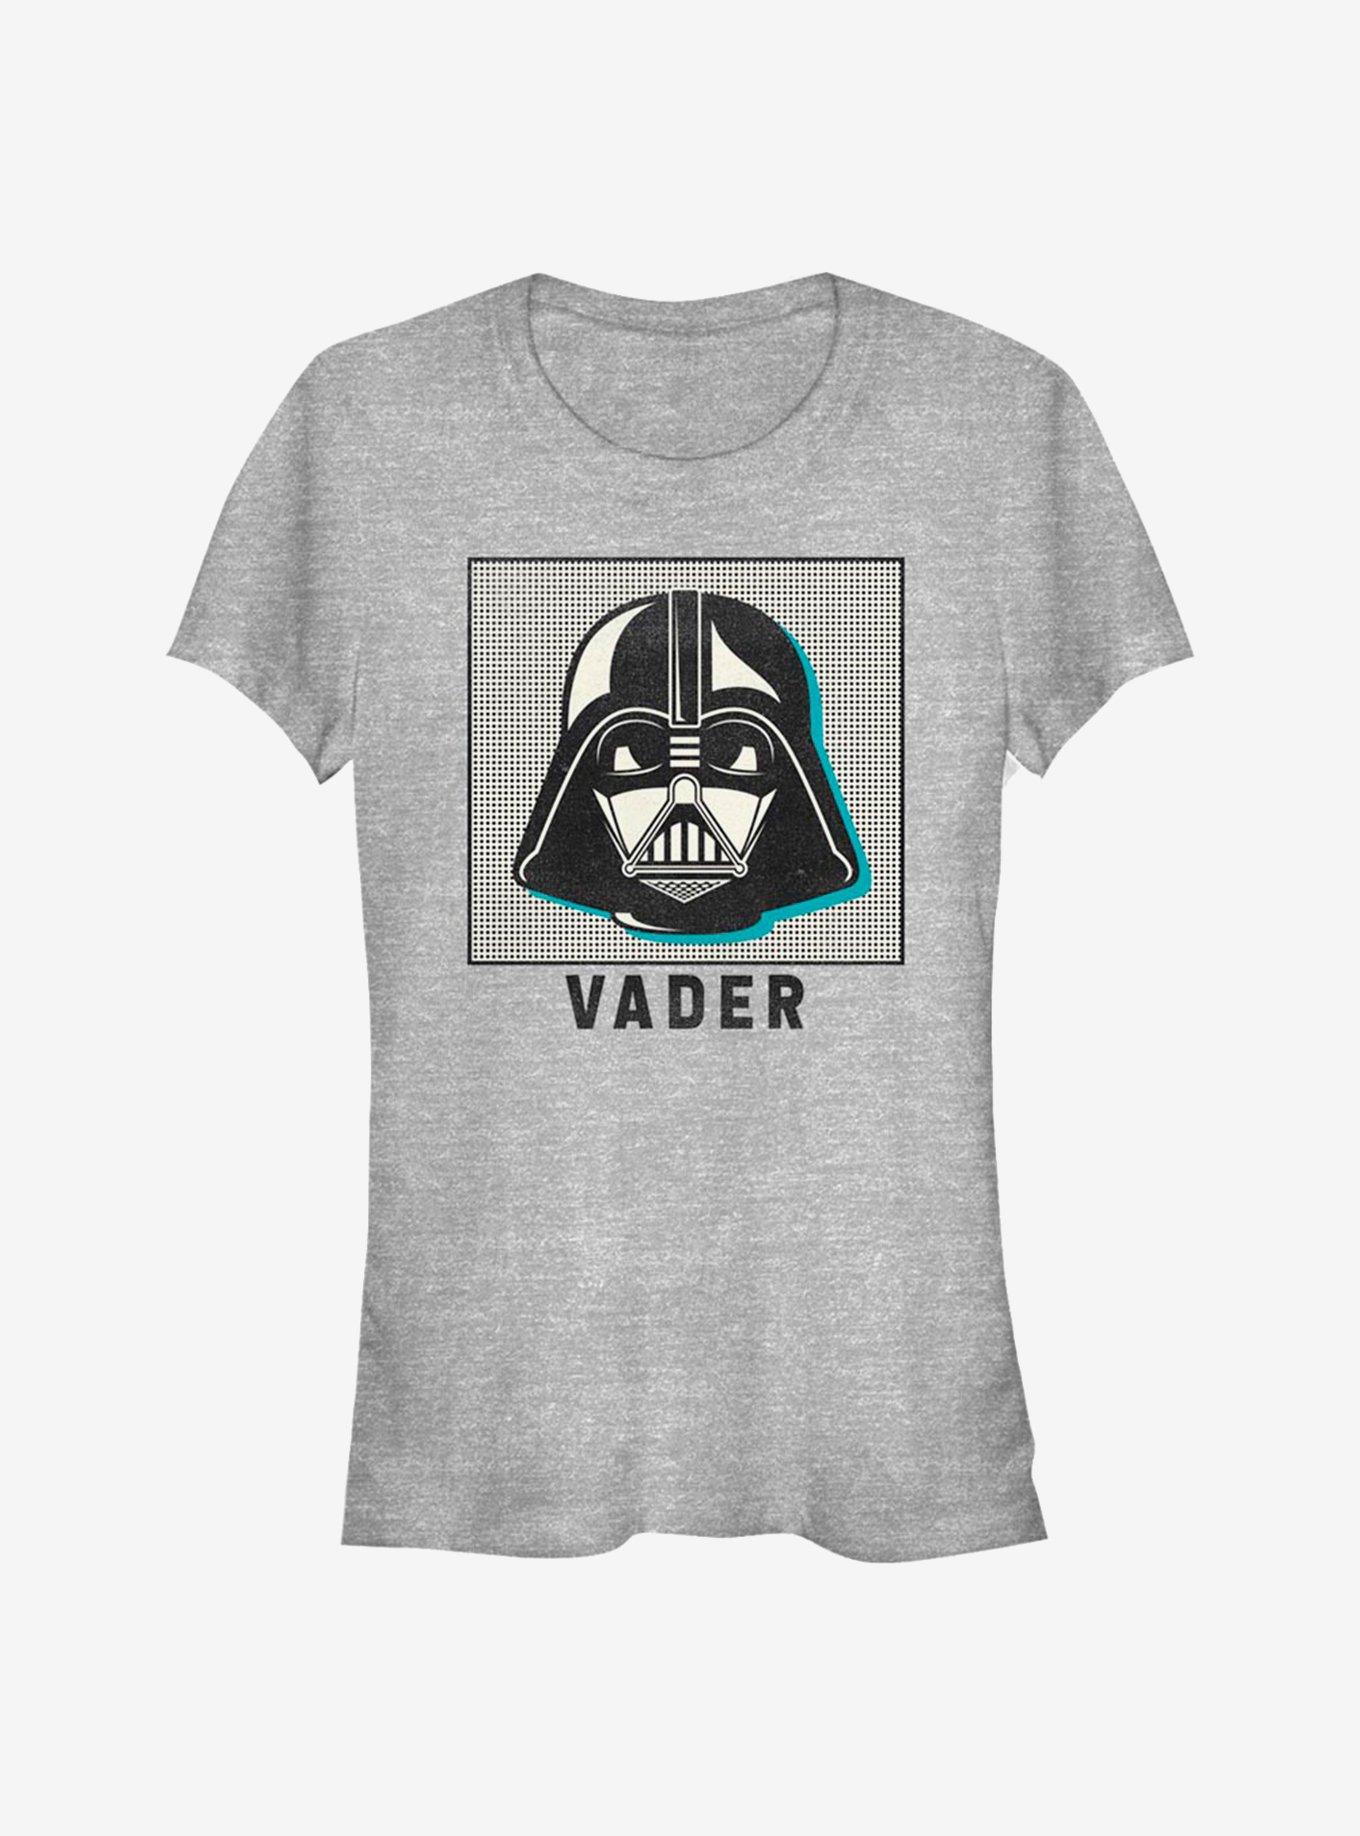 Star Wars Vader Girls T-Shirt